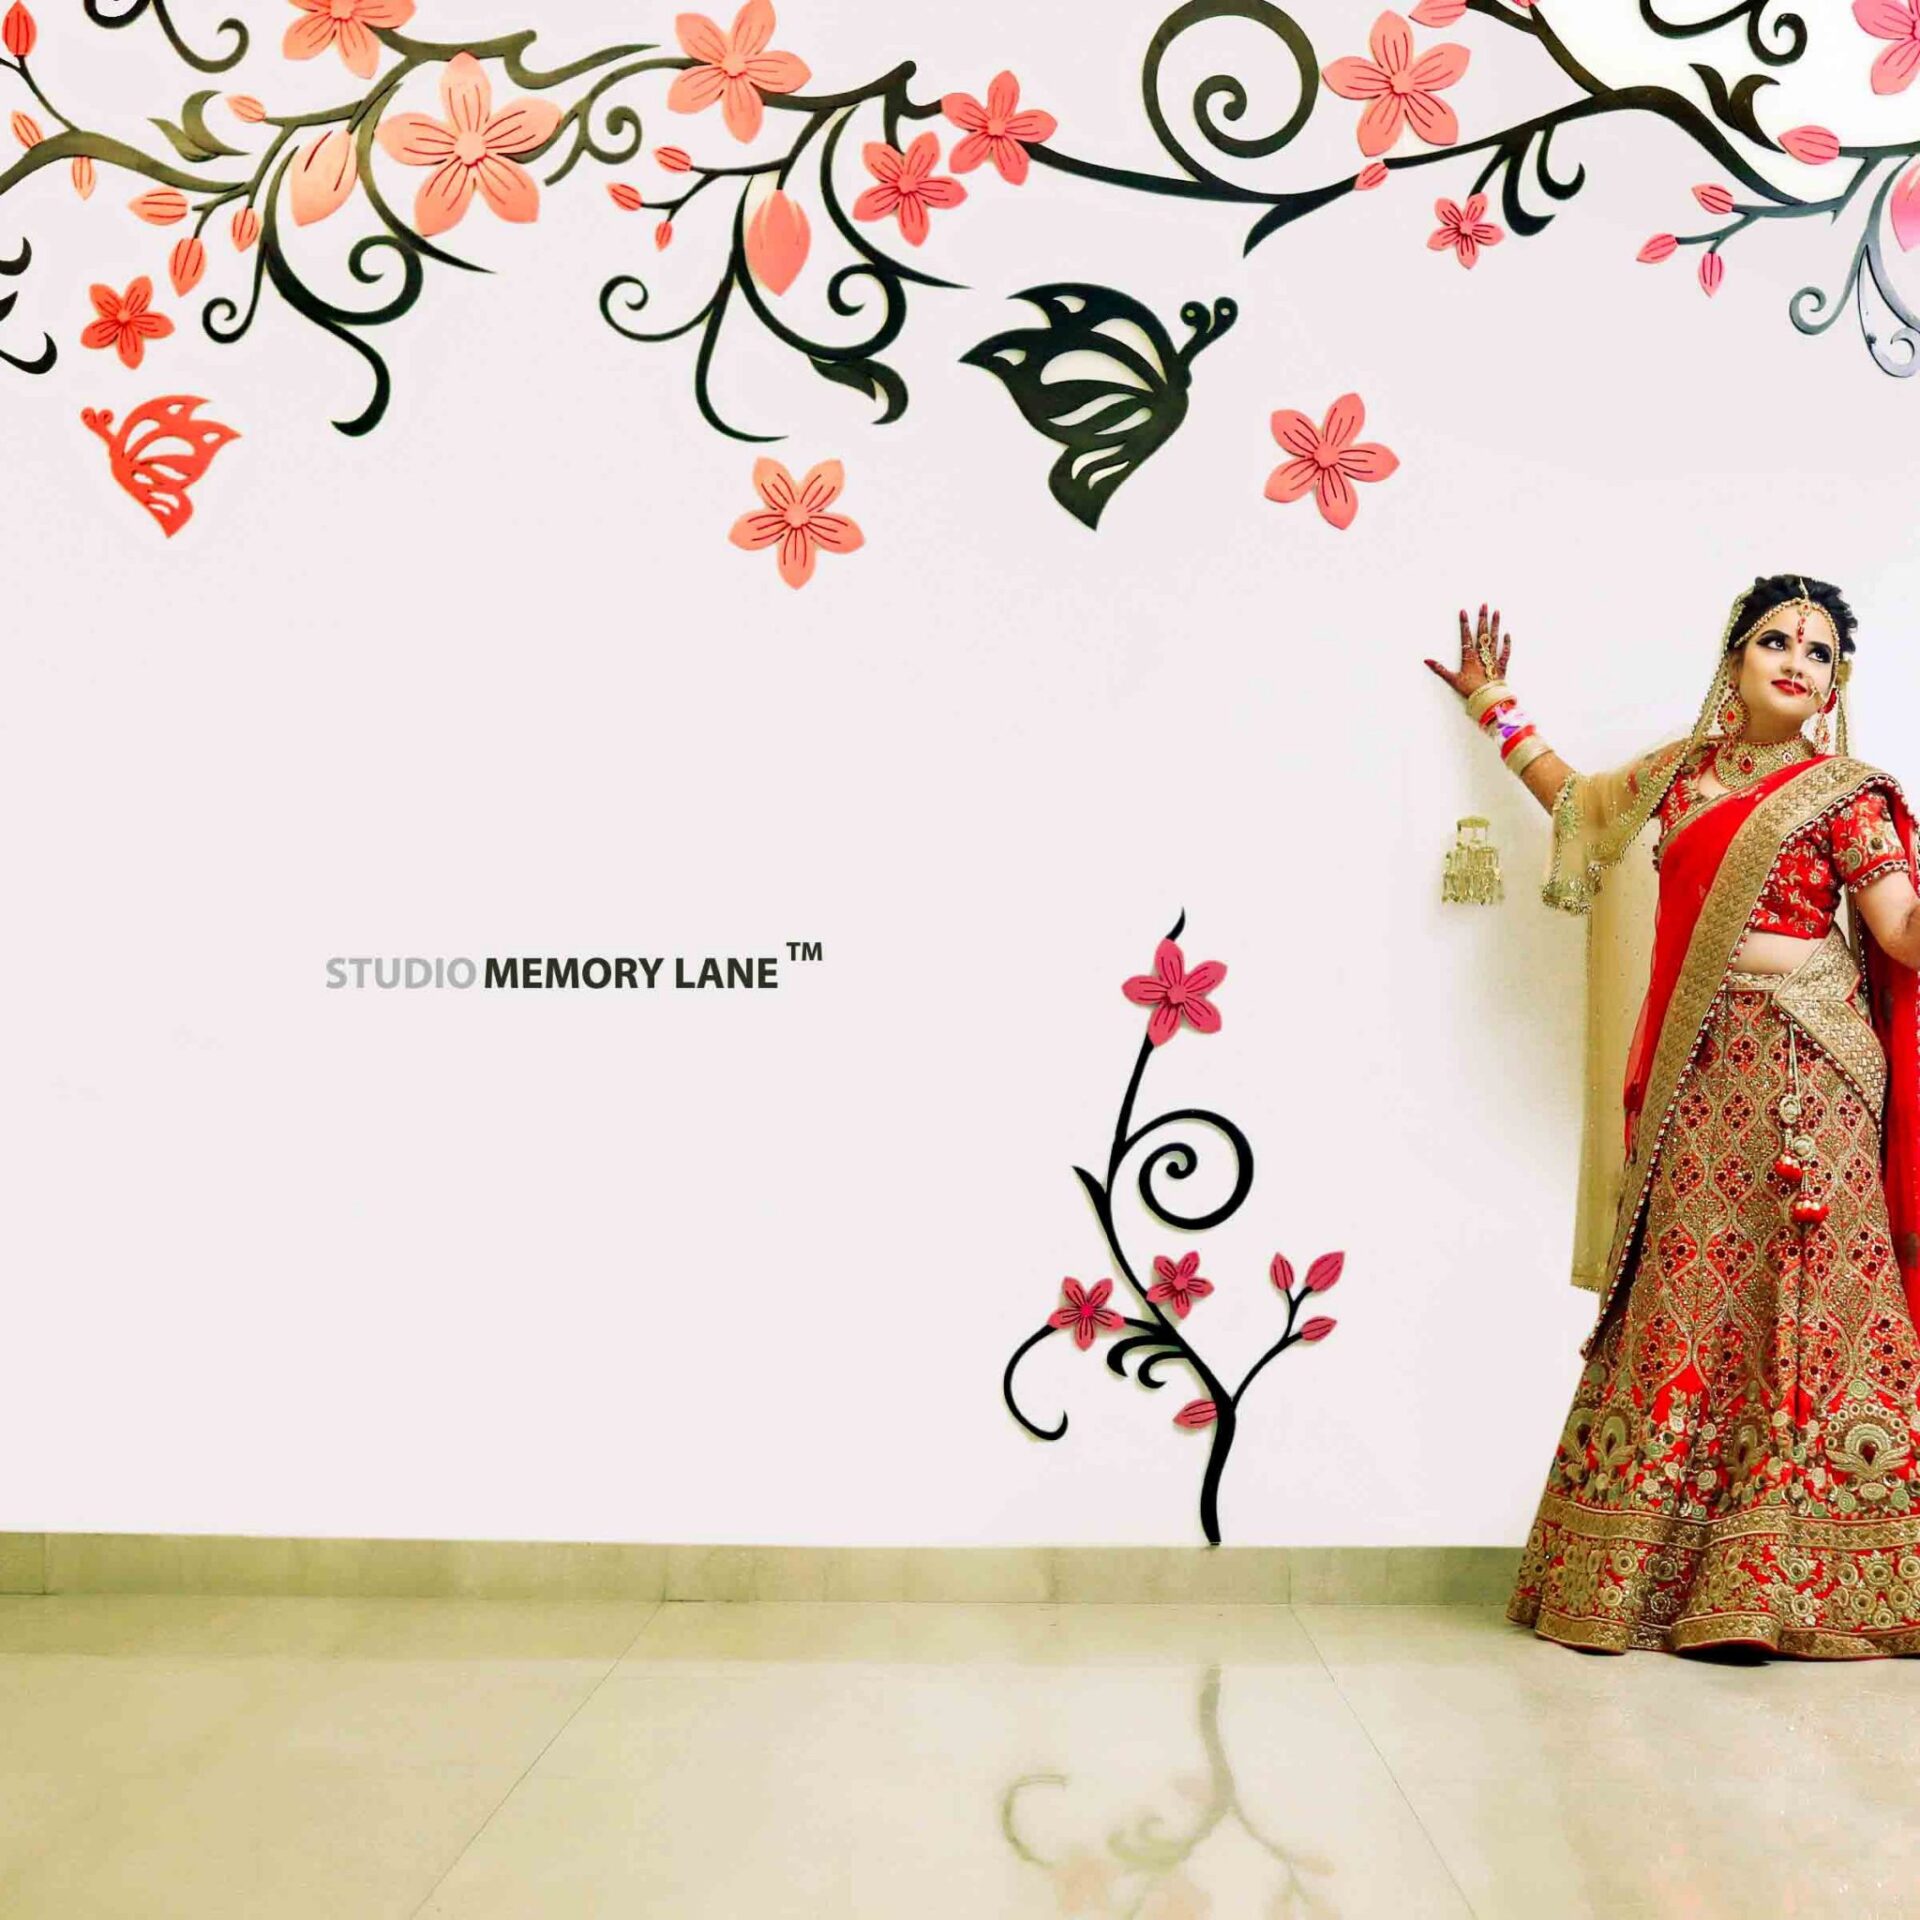 Top wedding photographer Chandigarh